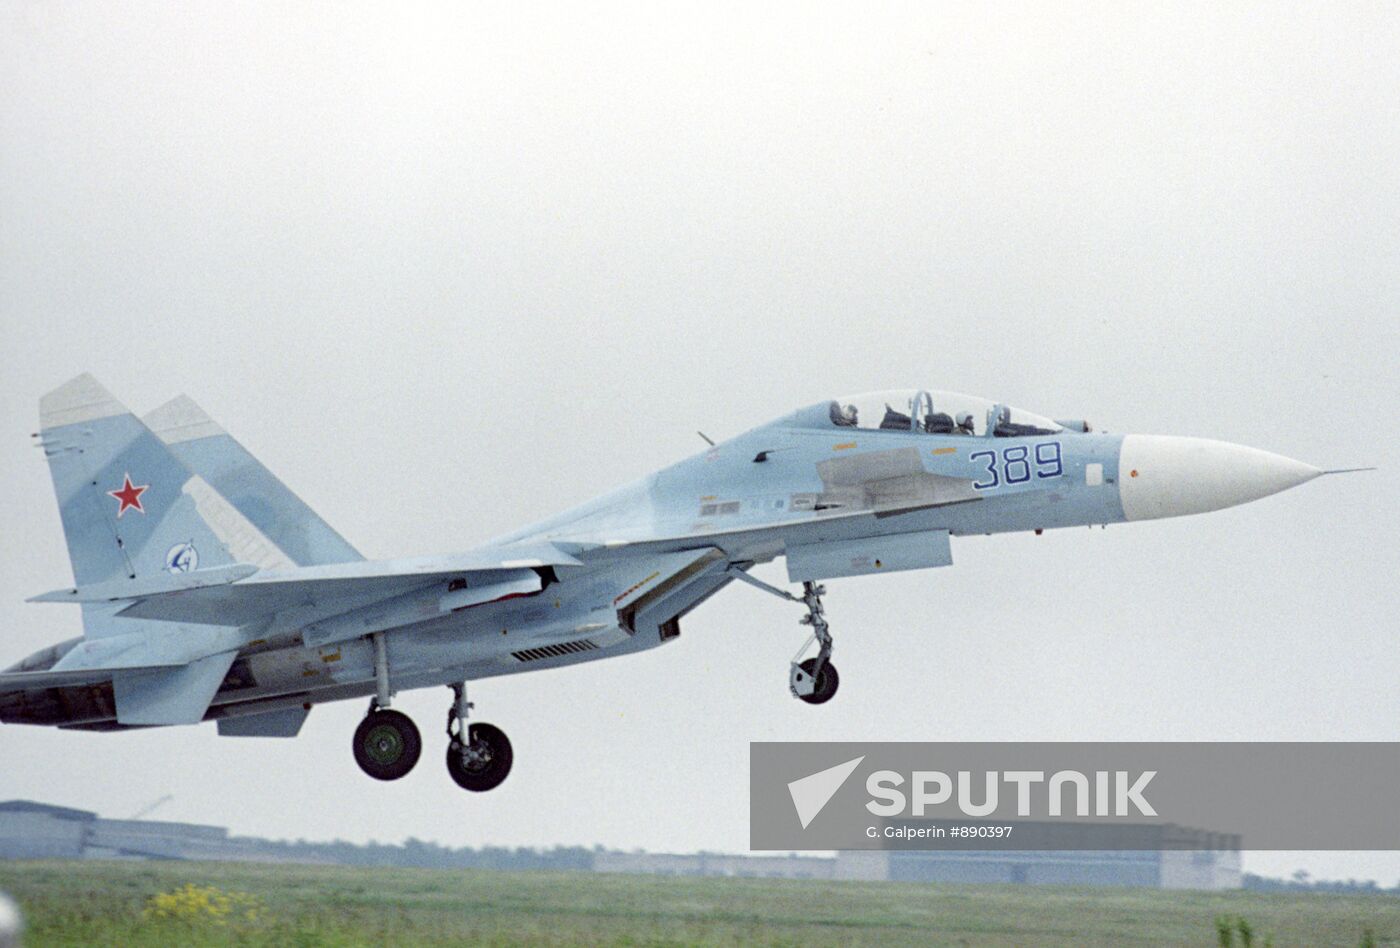 A Sukhoi Su-27 Flanker fighter-interceptor